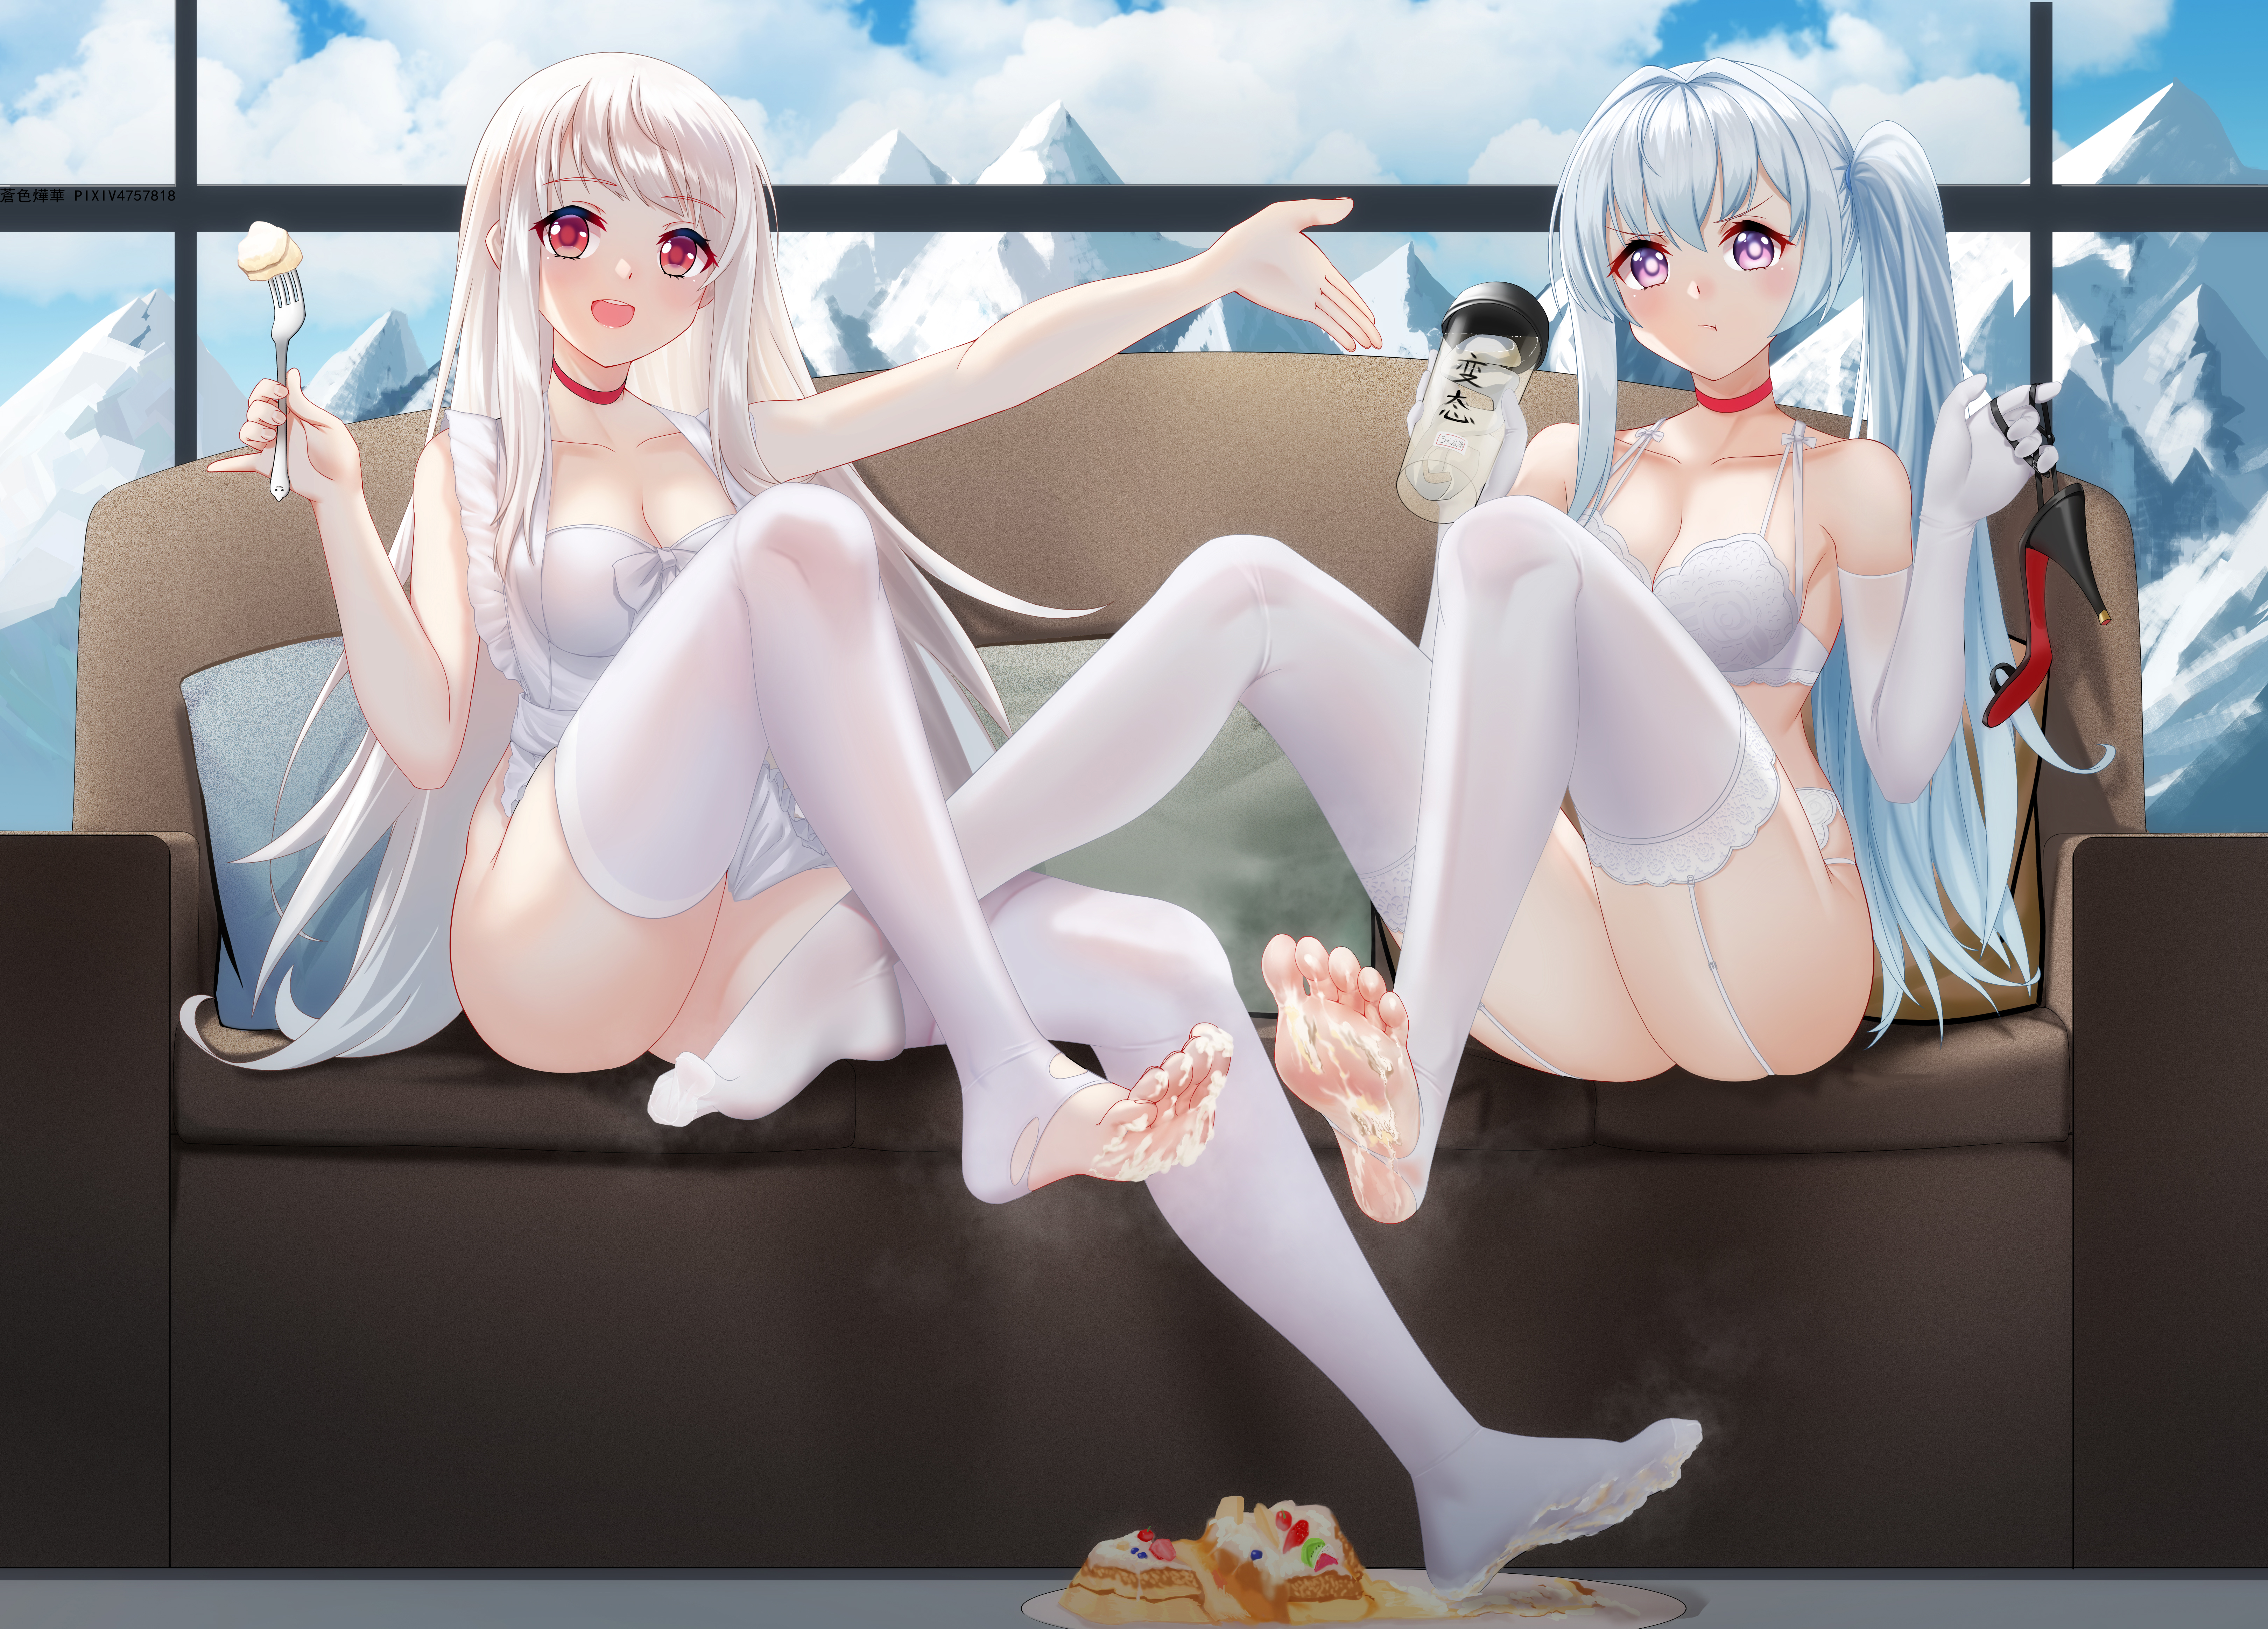 Anime 6482x4655 anime anime girls Hwcsonline artwork Zhanjian Shaonu underwear thigh-highs feet cake foot fetishism white lingerie partially clothed apron naked apron